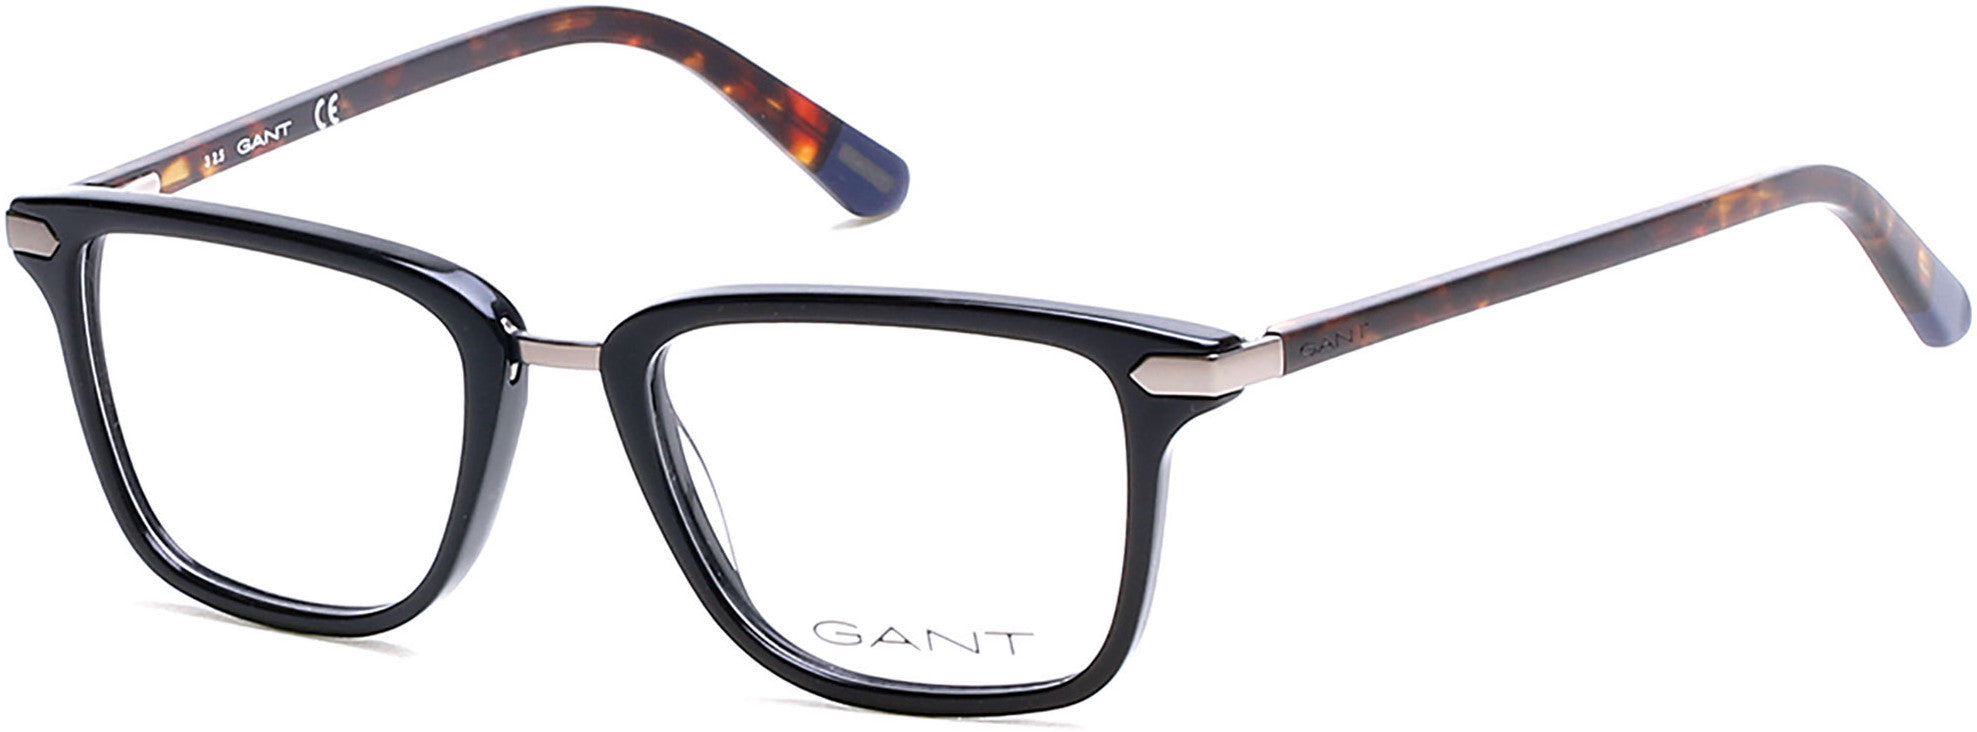 Gant GA3116 Geometric Eyeglasses 001-001 - Shiny Black